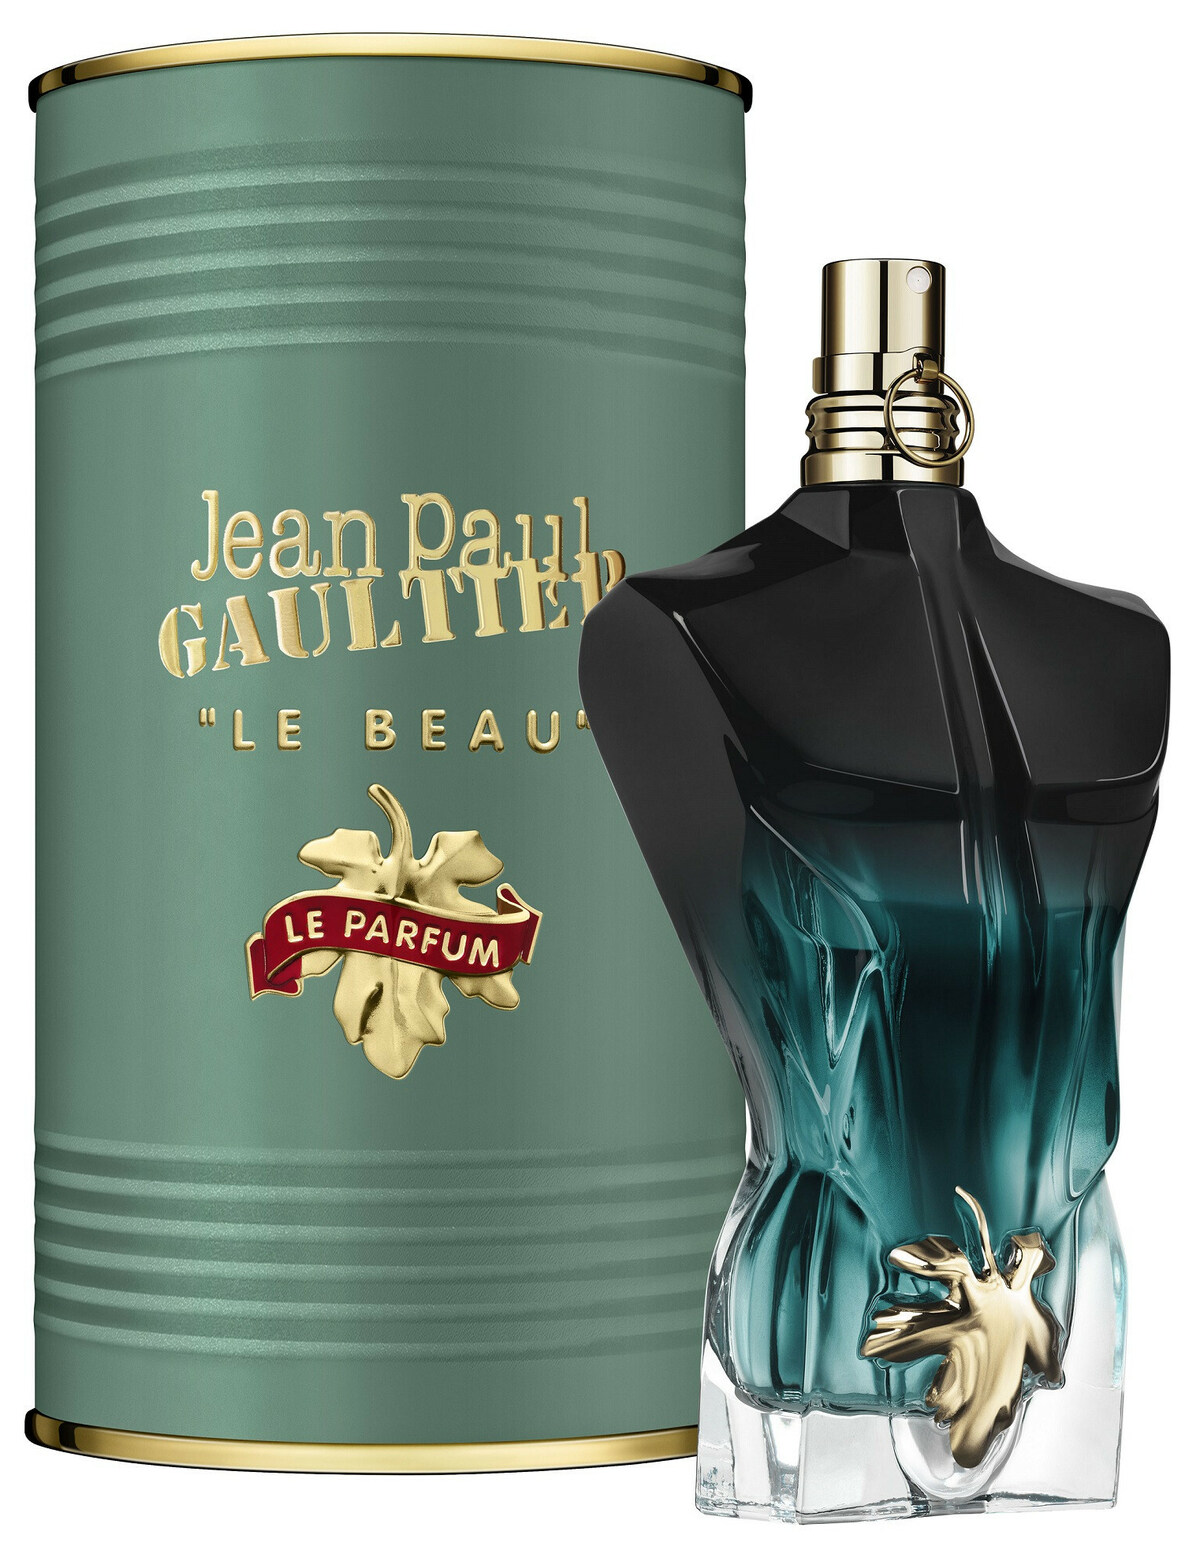 Jean P. Gaultier Le Beau Le Parfum - EDP 75 ml + 2 mesiace na vrátenie tovaru